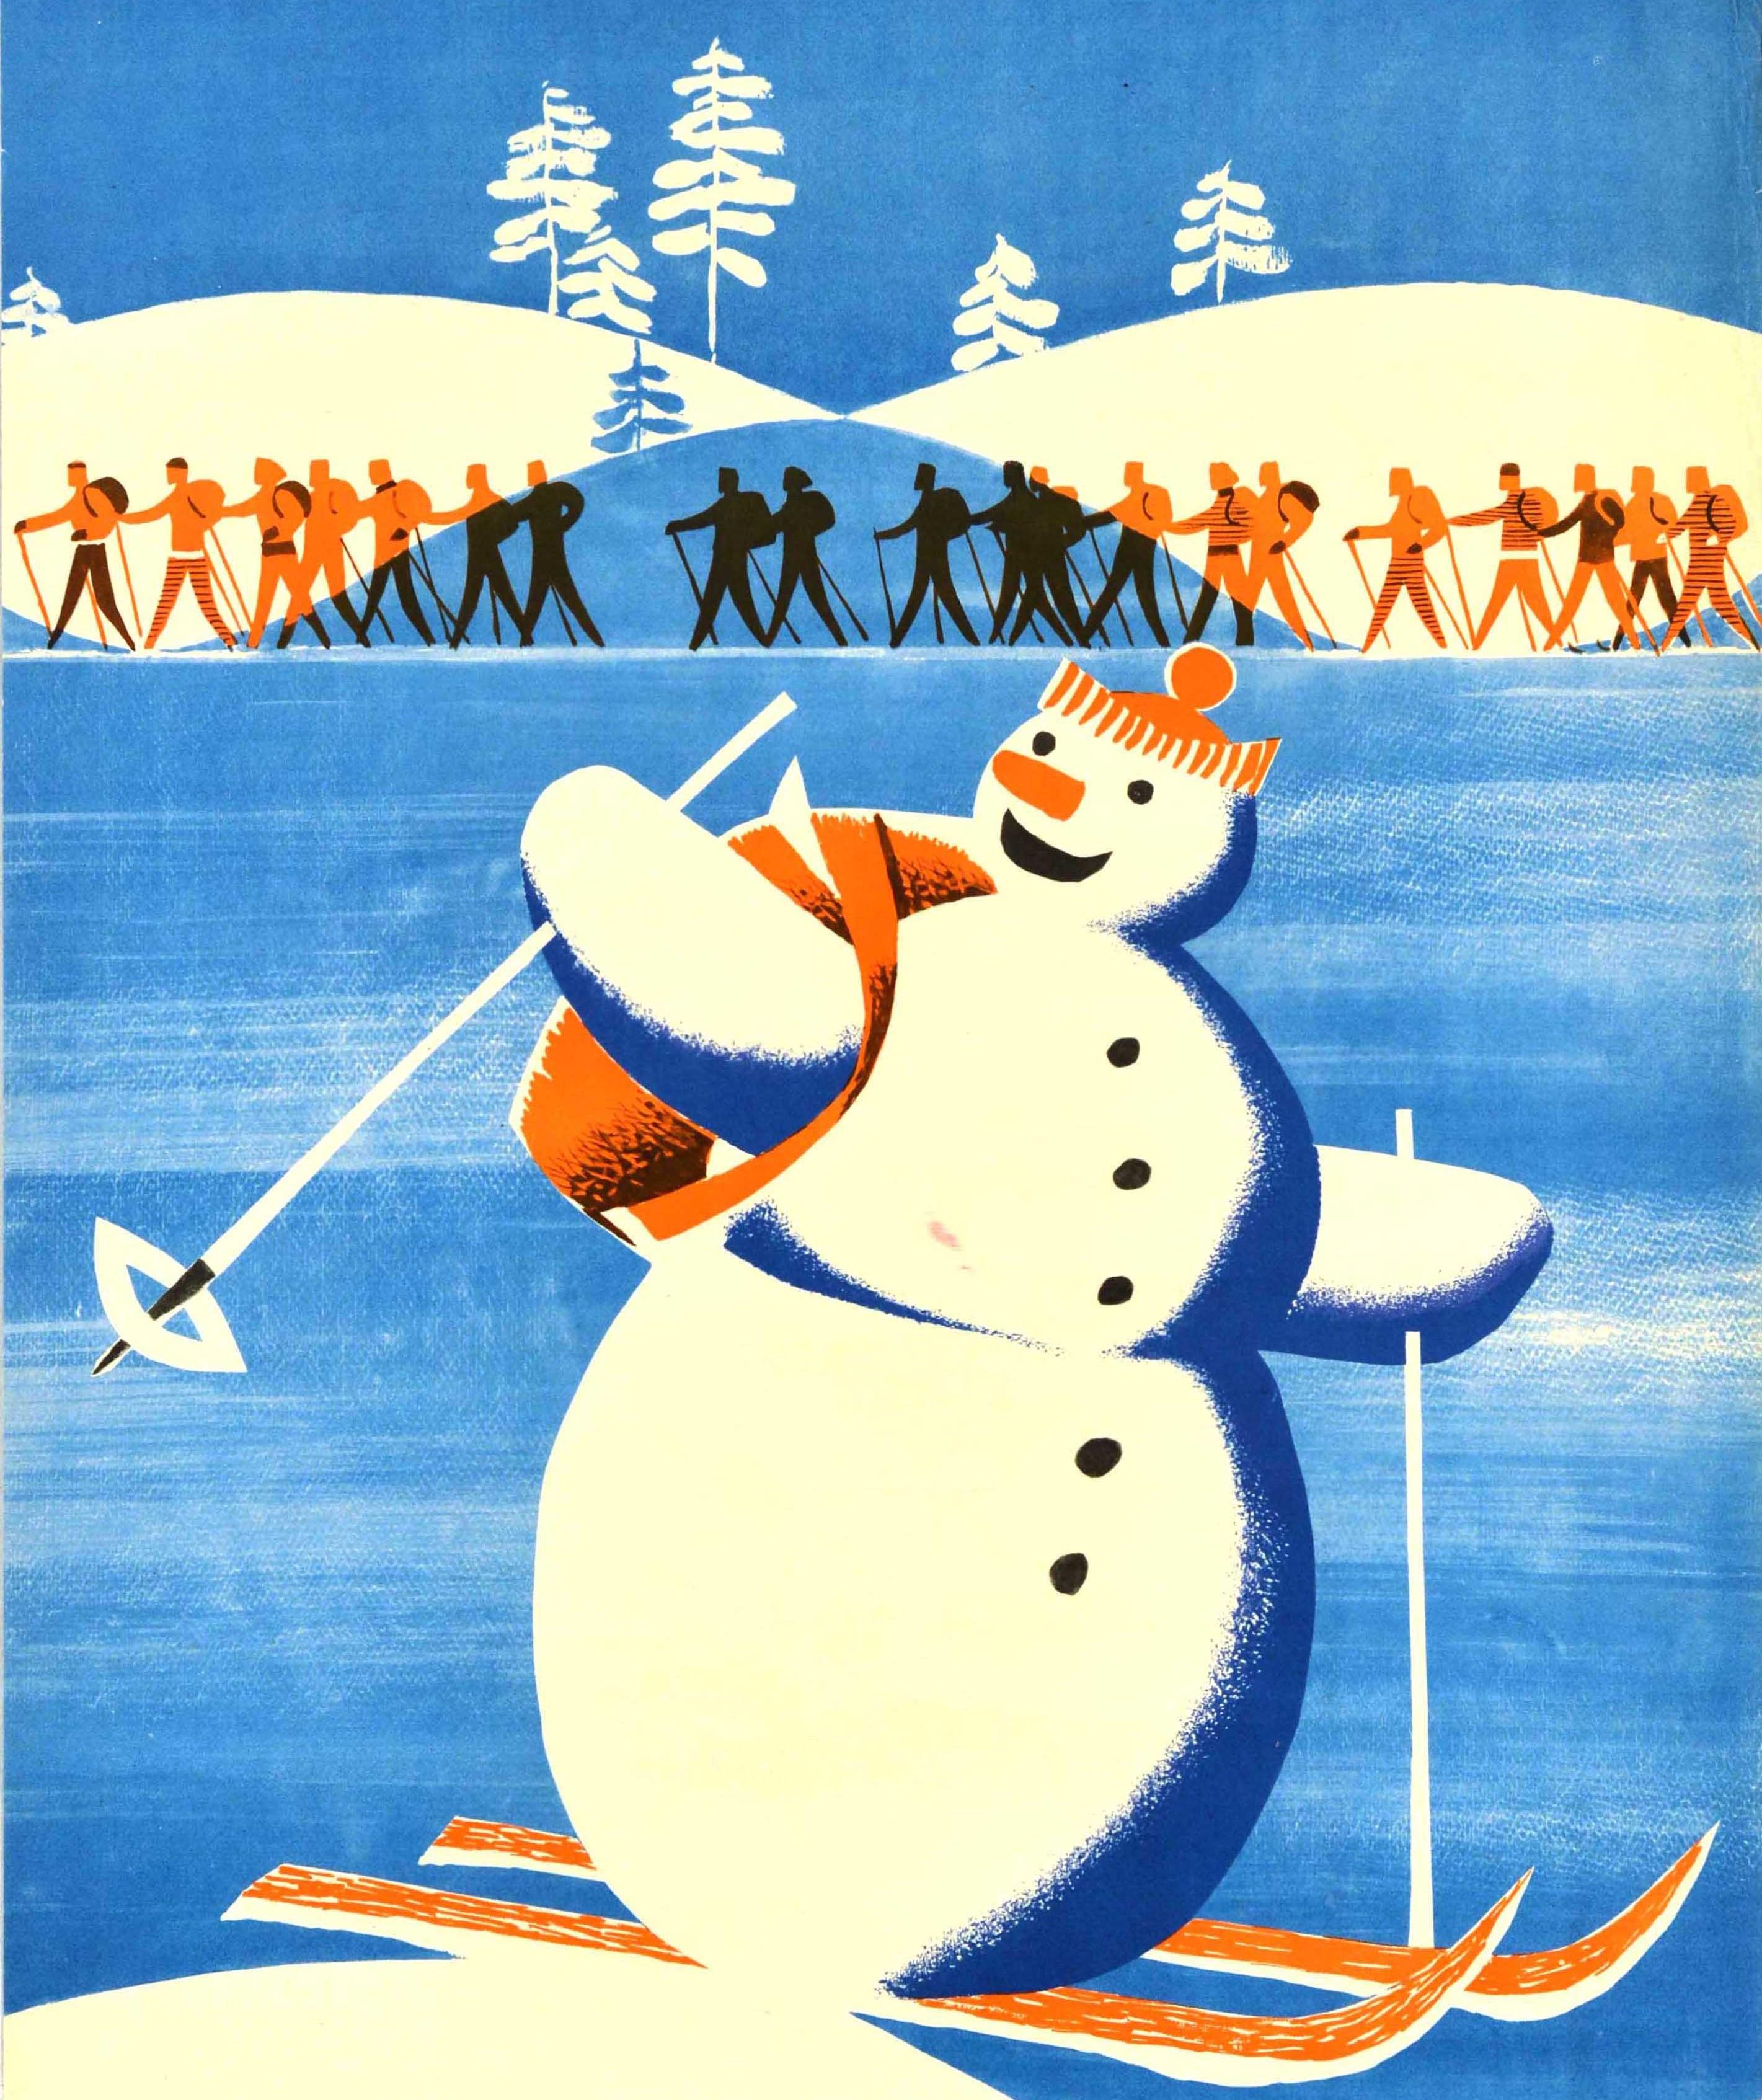 Original Vintage Winter Sport Poster Ski Tourists Snowman Cross-Country Skiers - Print by Berzinsh